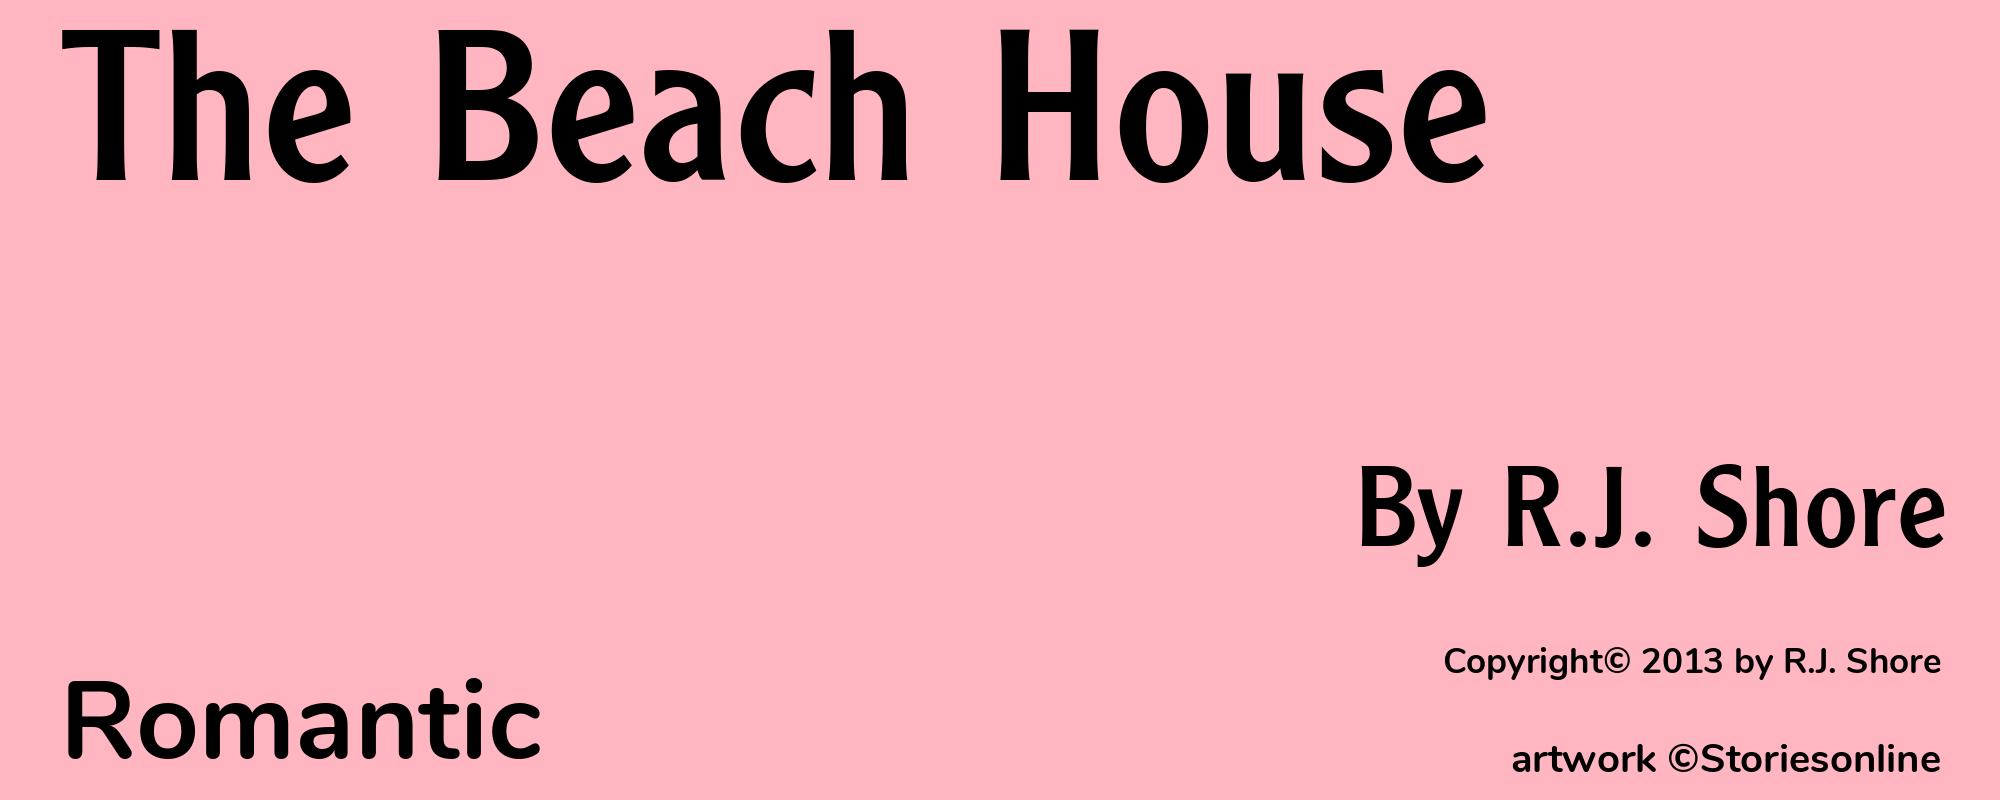 The Beach House - Cover